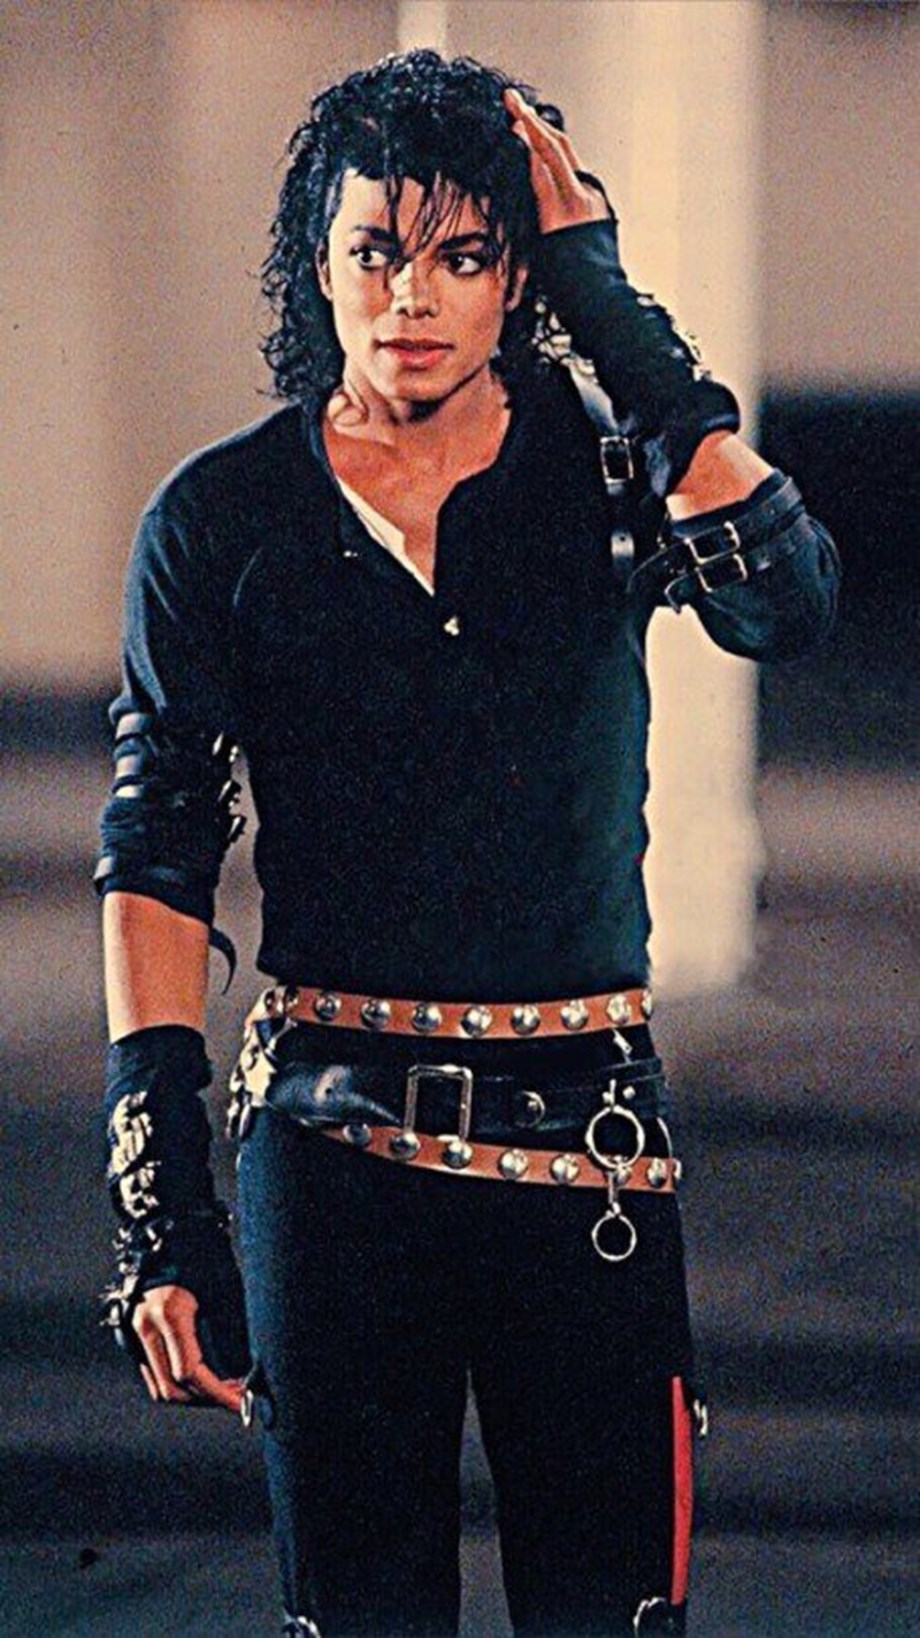 People News Roundup: Michael Jackson's 'Bad' tour jacket up for auction | Devdiscourse